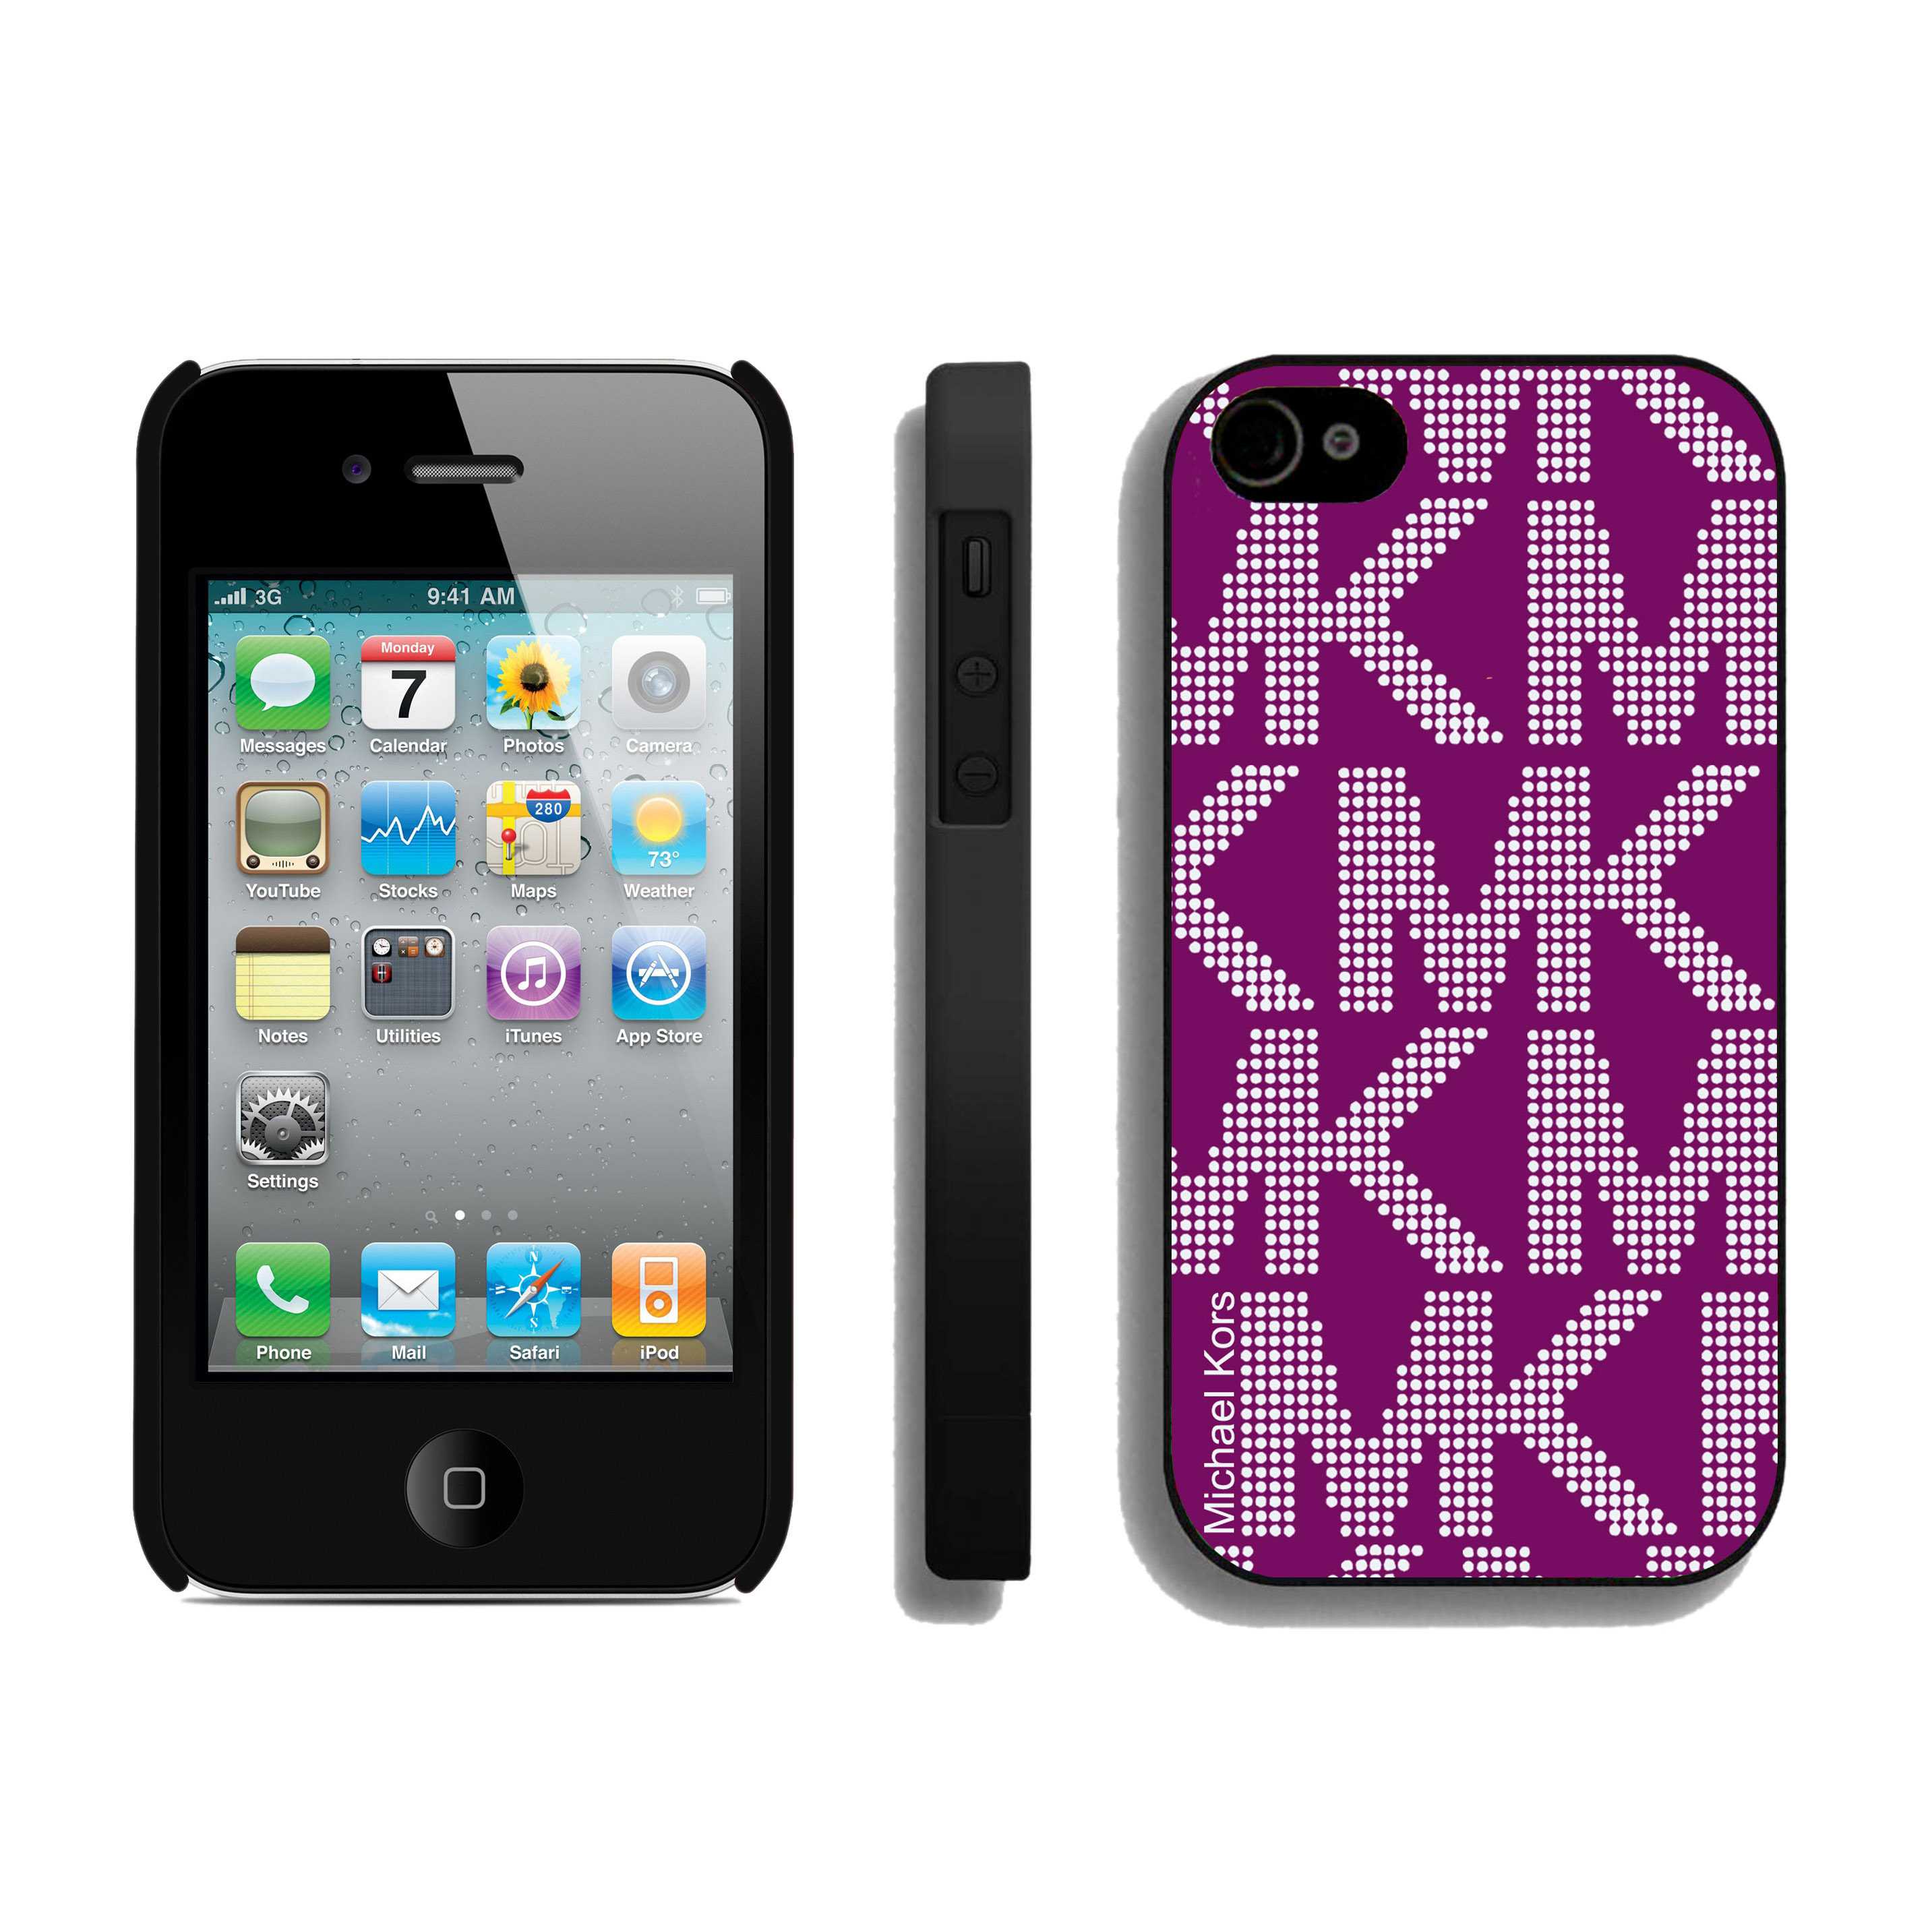 Michael Kors Big Logo Signature Purple iPhone 4 Cases